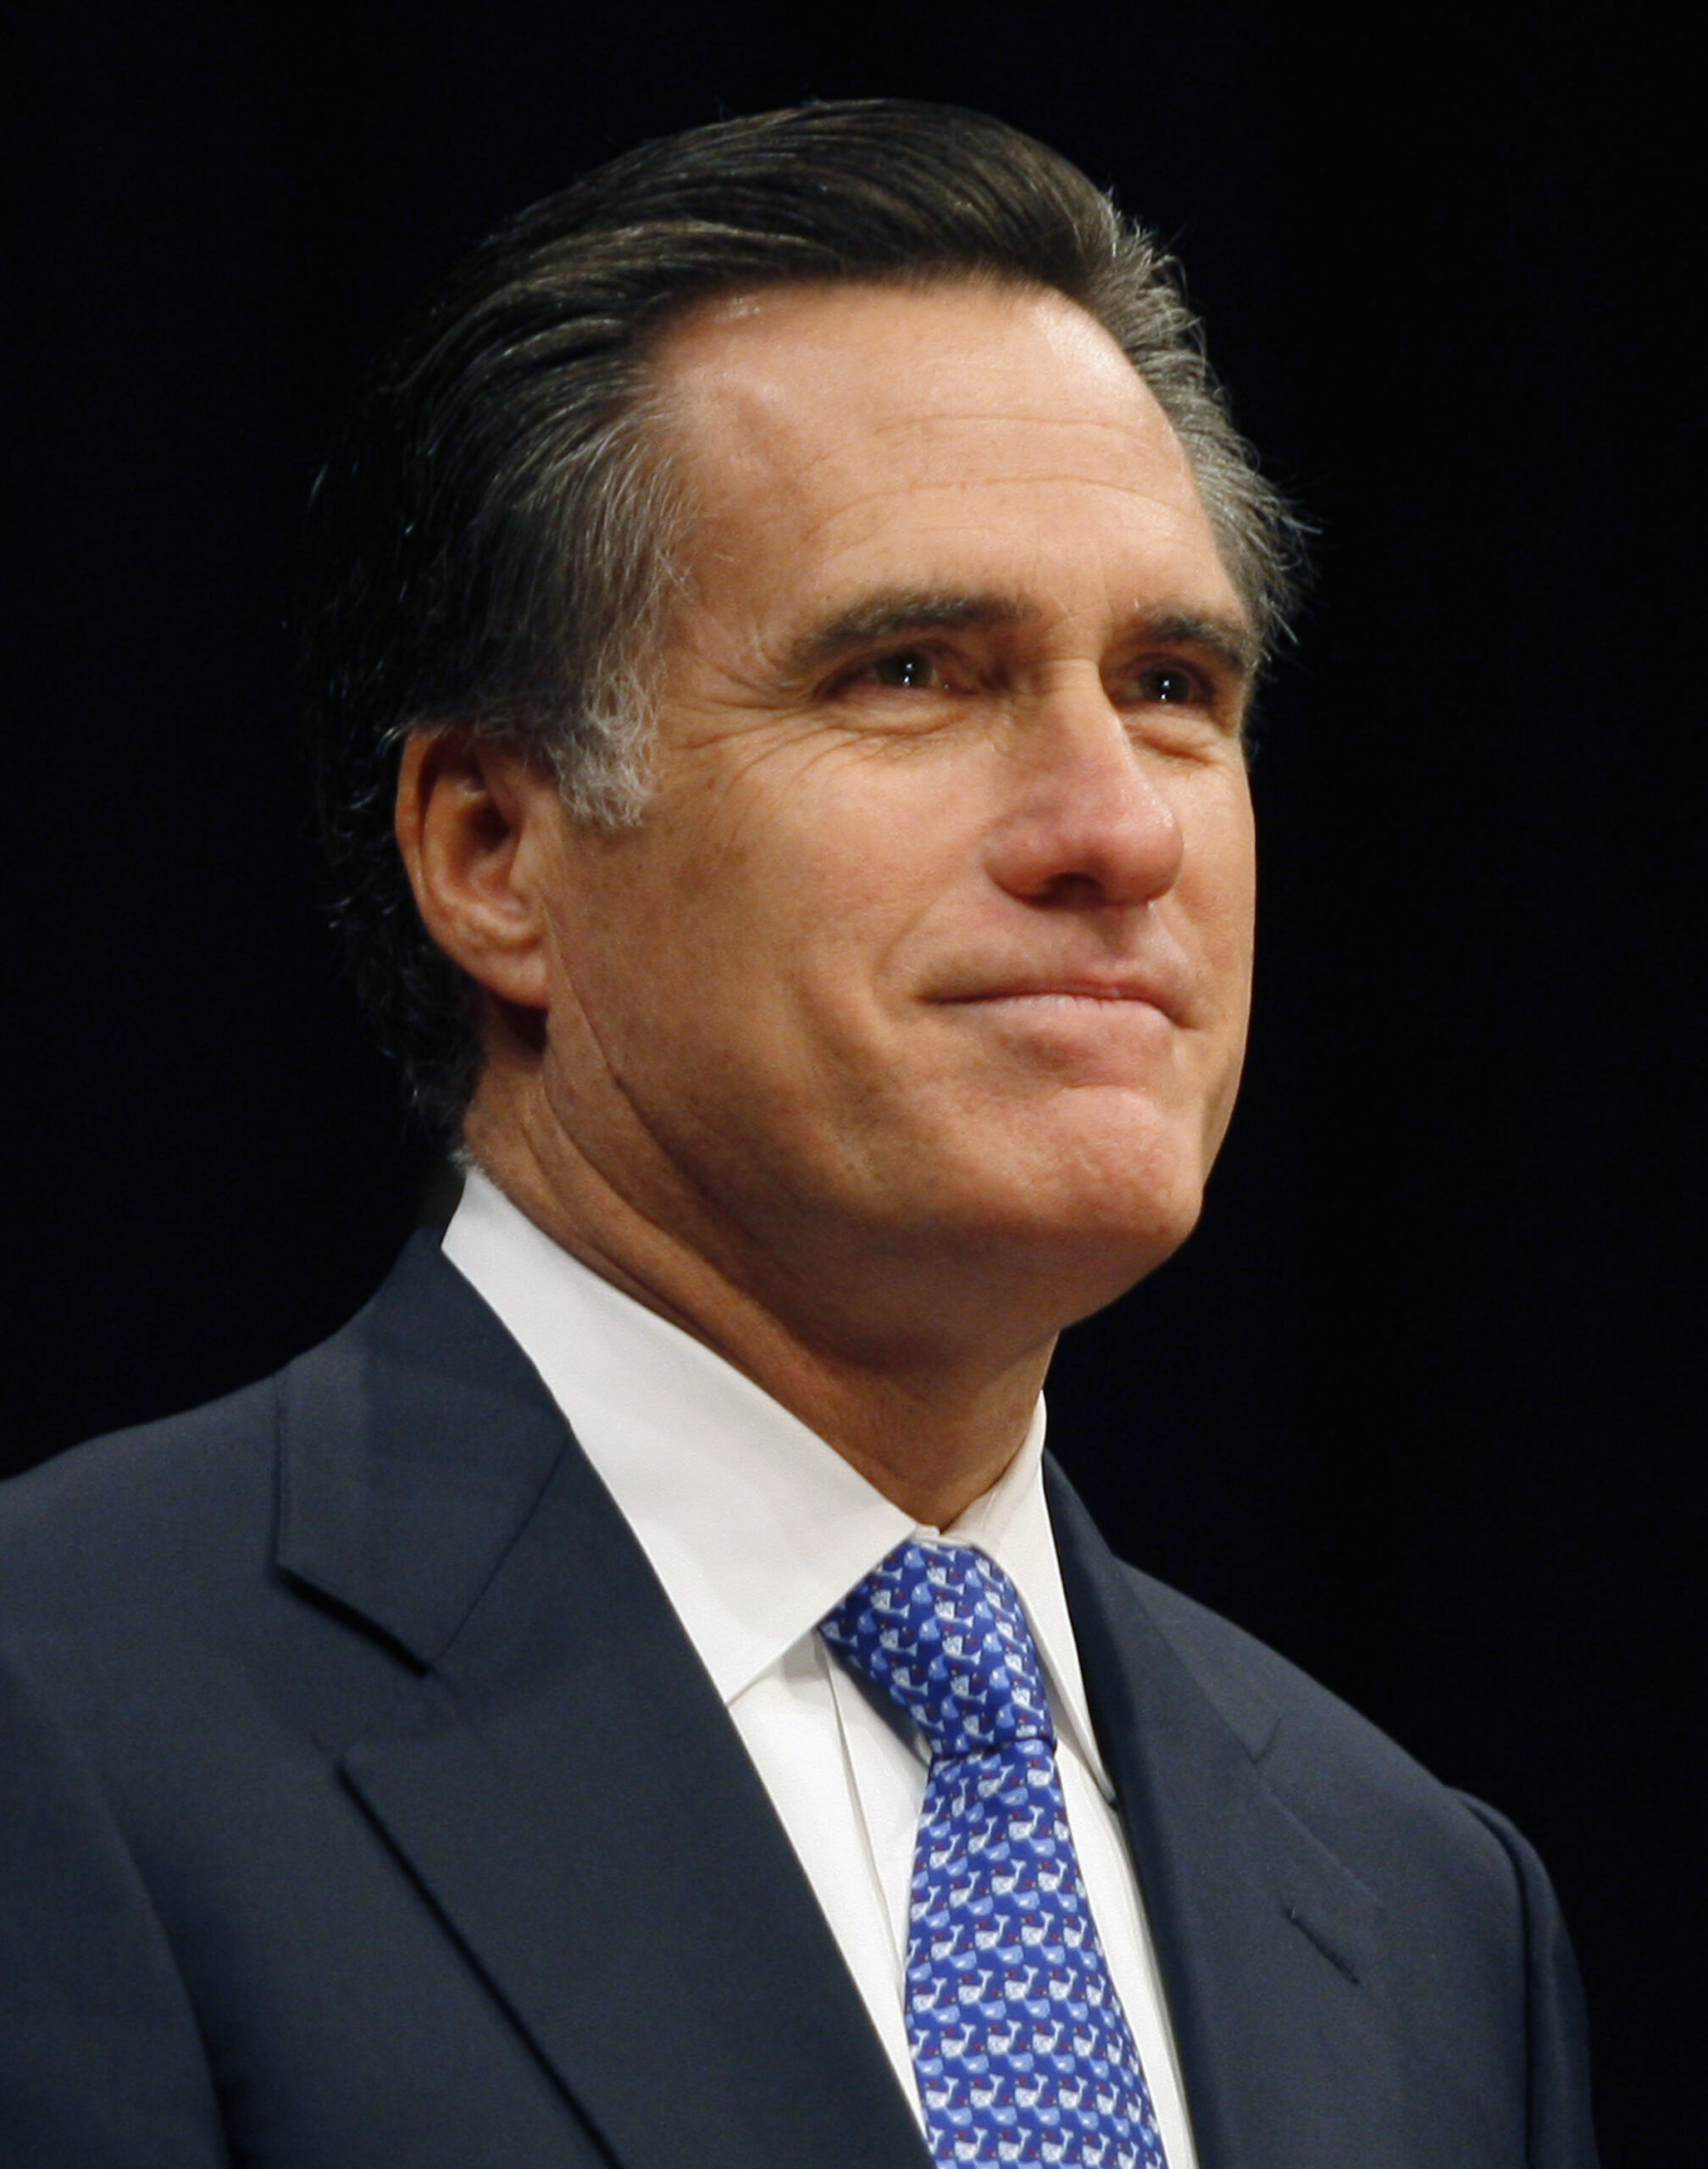 Quick Analysis: Mitt Romney Entering Race?